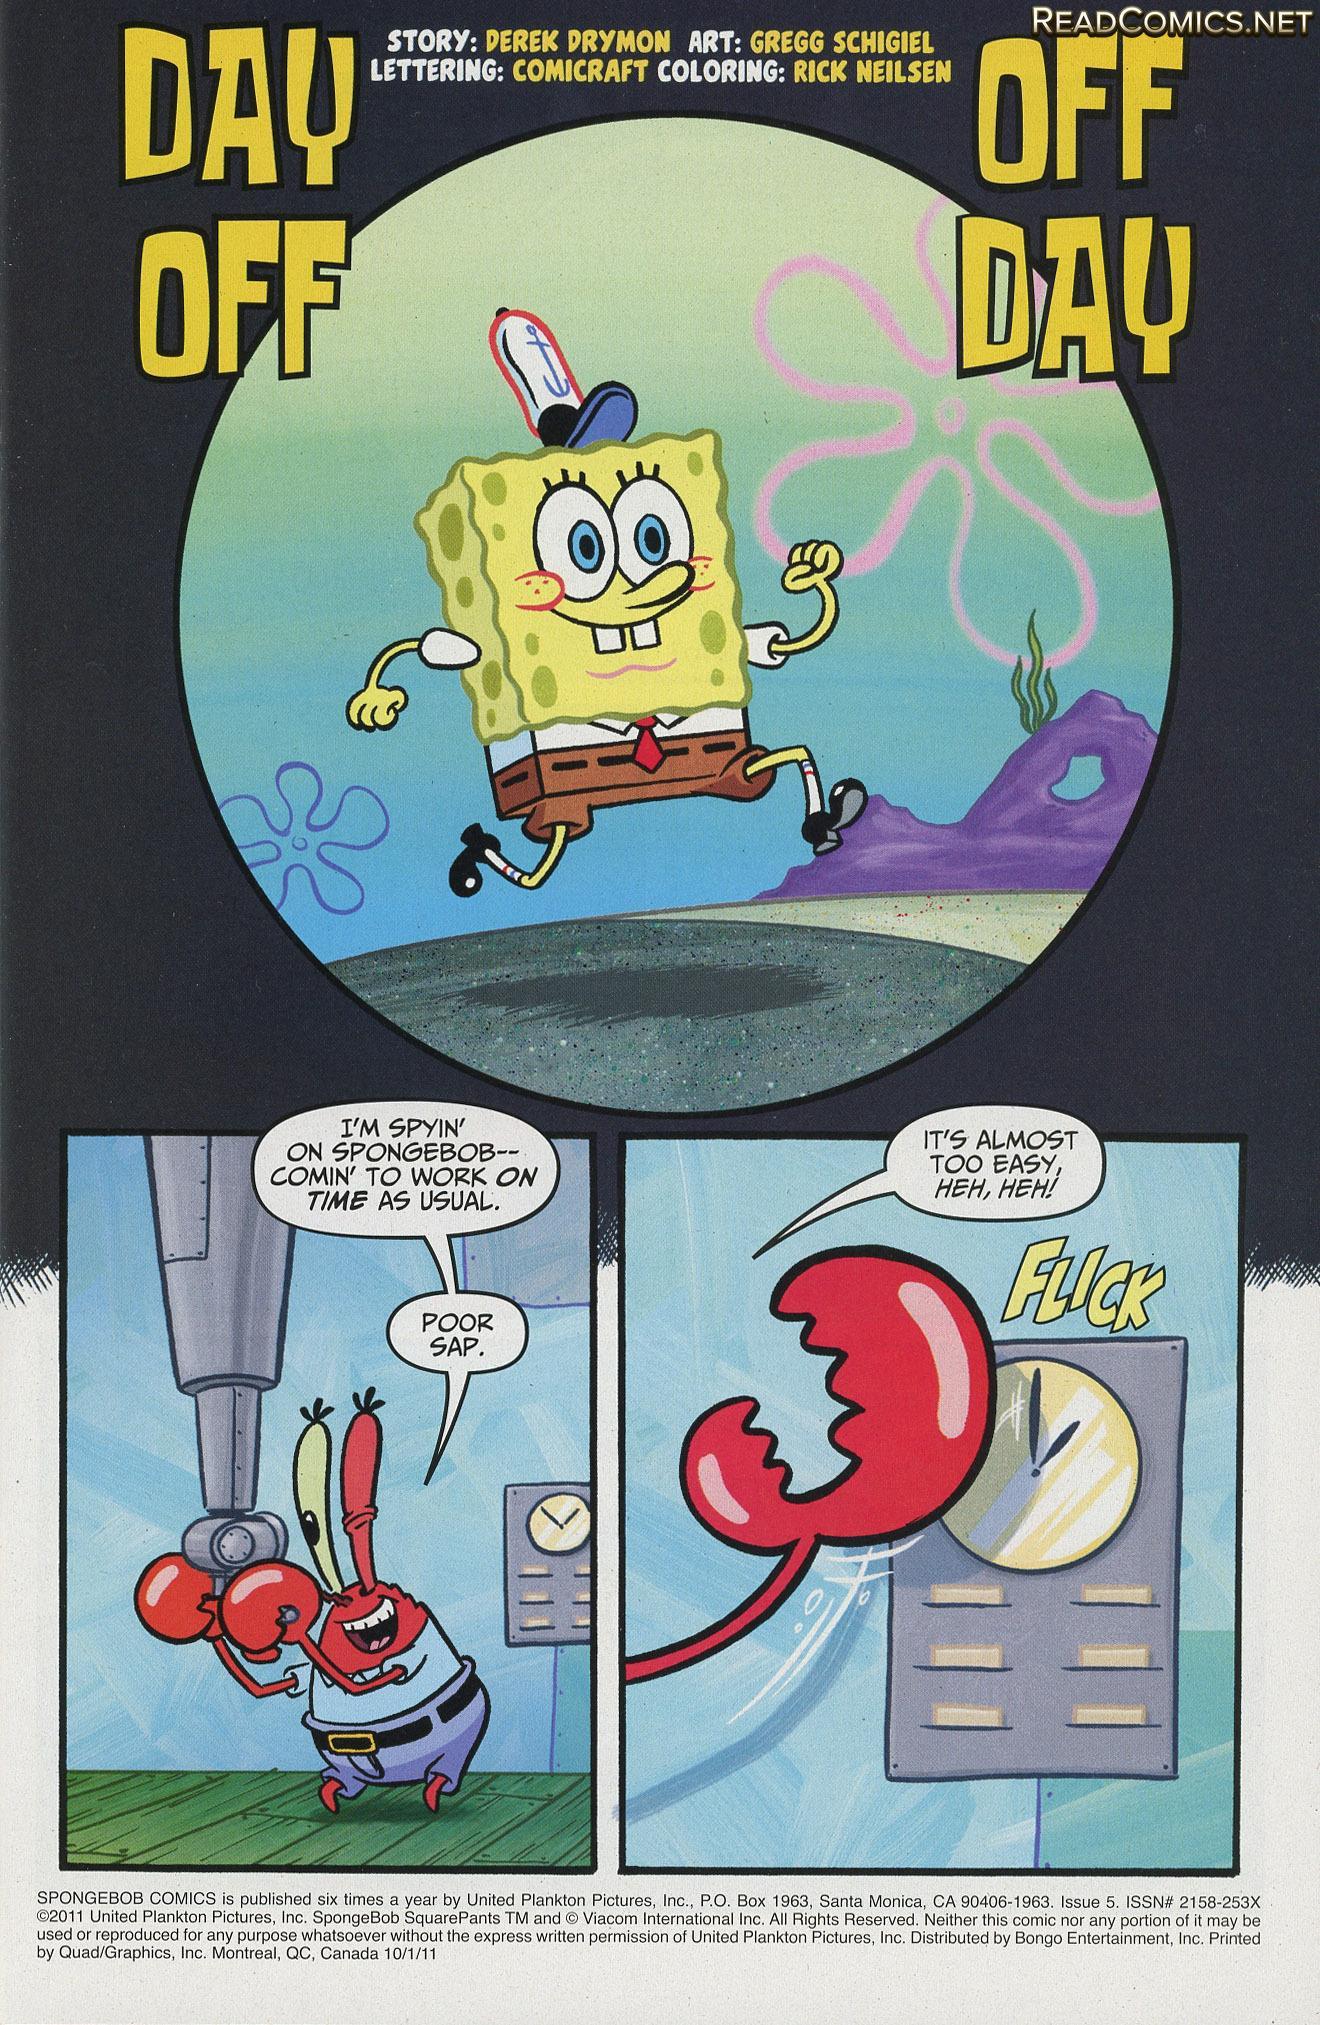 SpongeBob Comics (2011-): Chapter 5 - Page 3